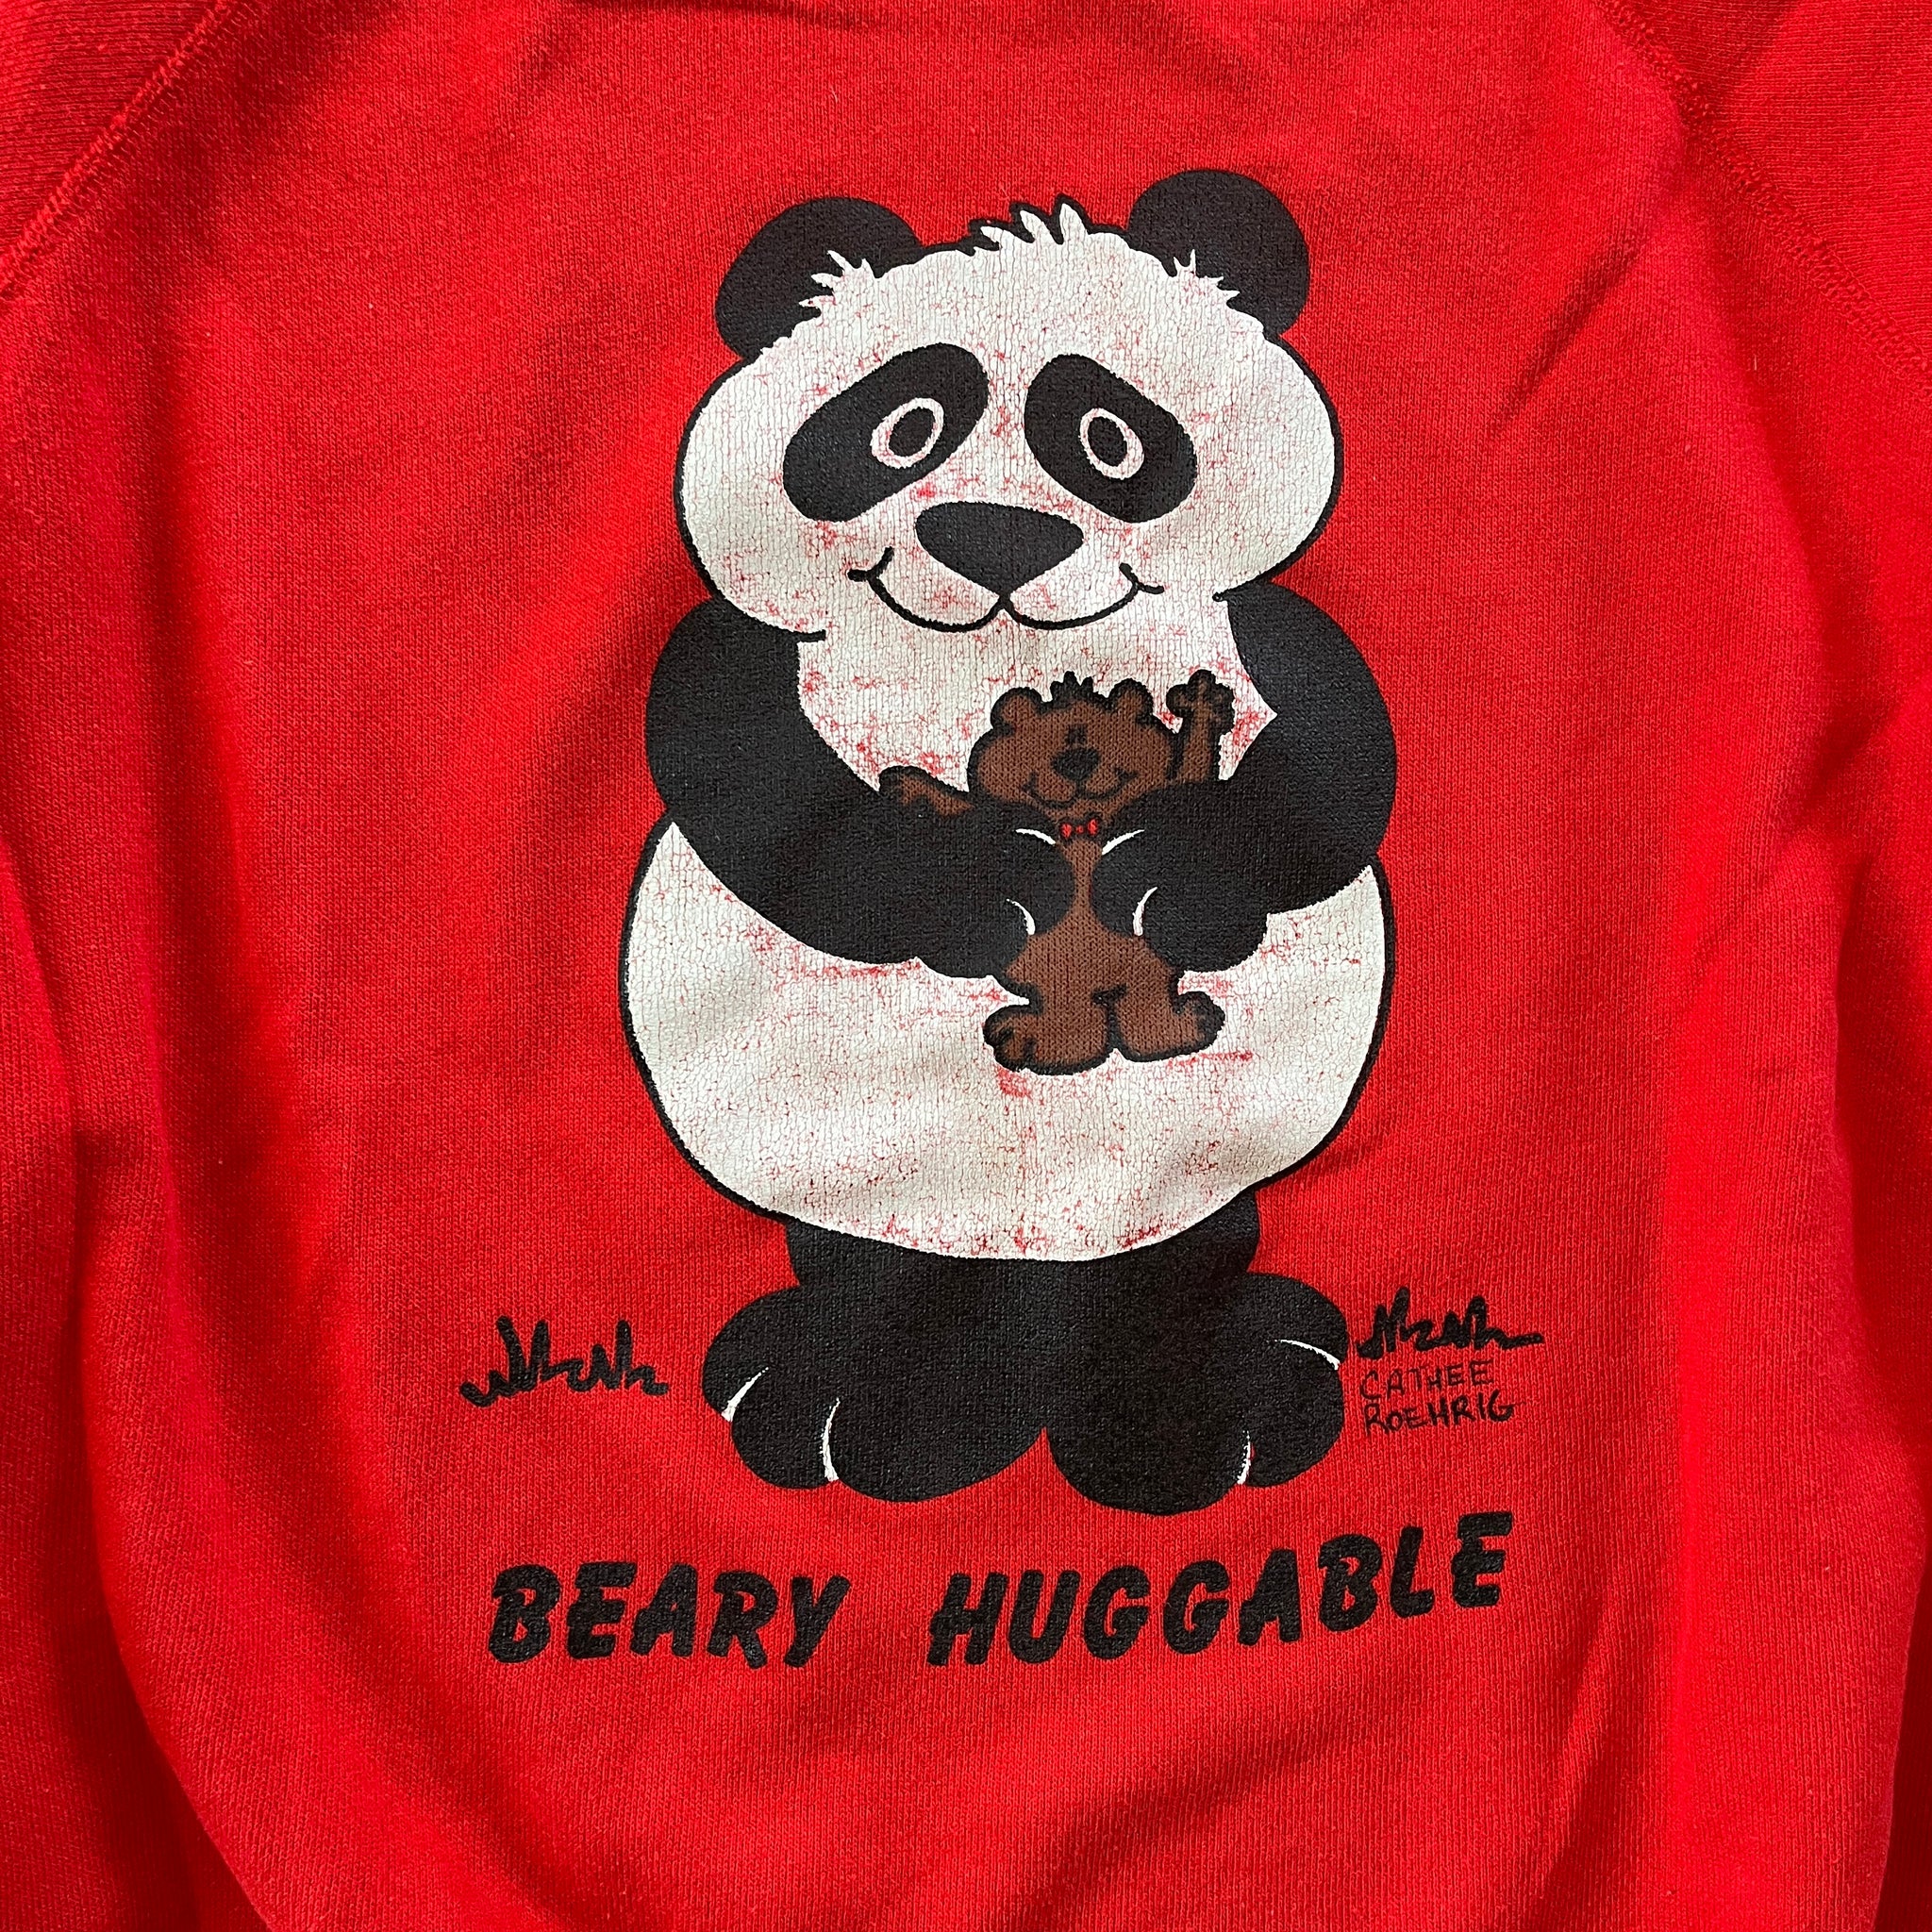 90s Beary Huggable Sweatshirt - M/L